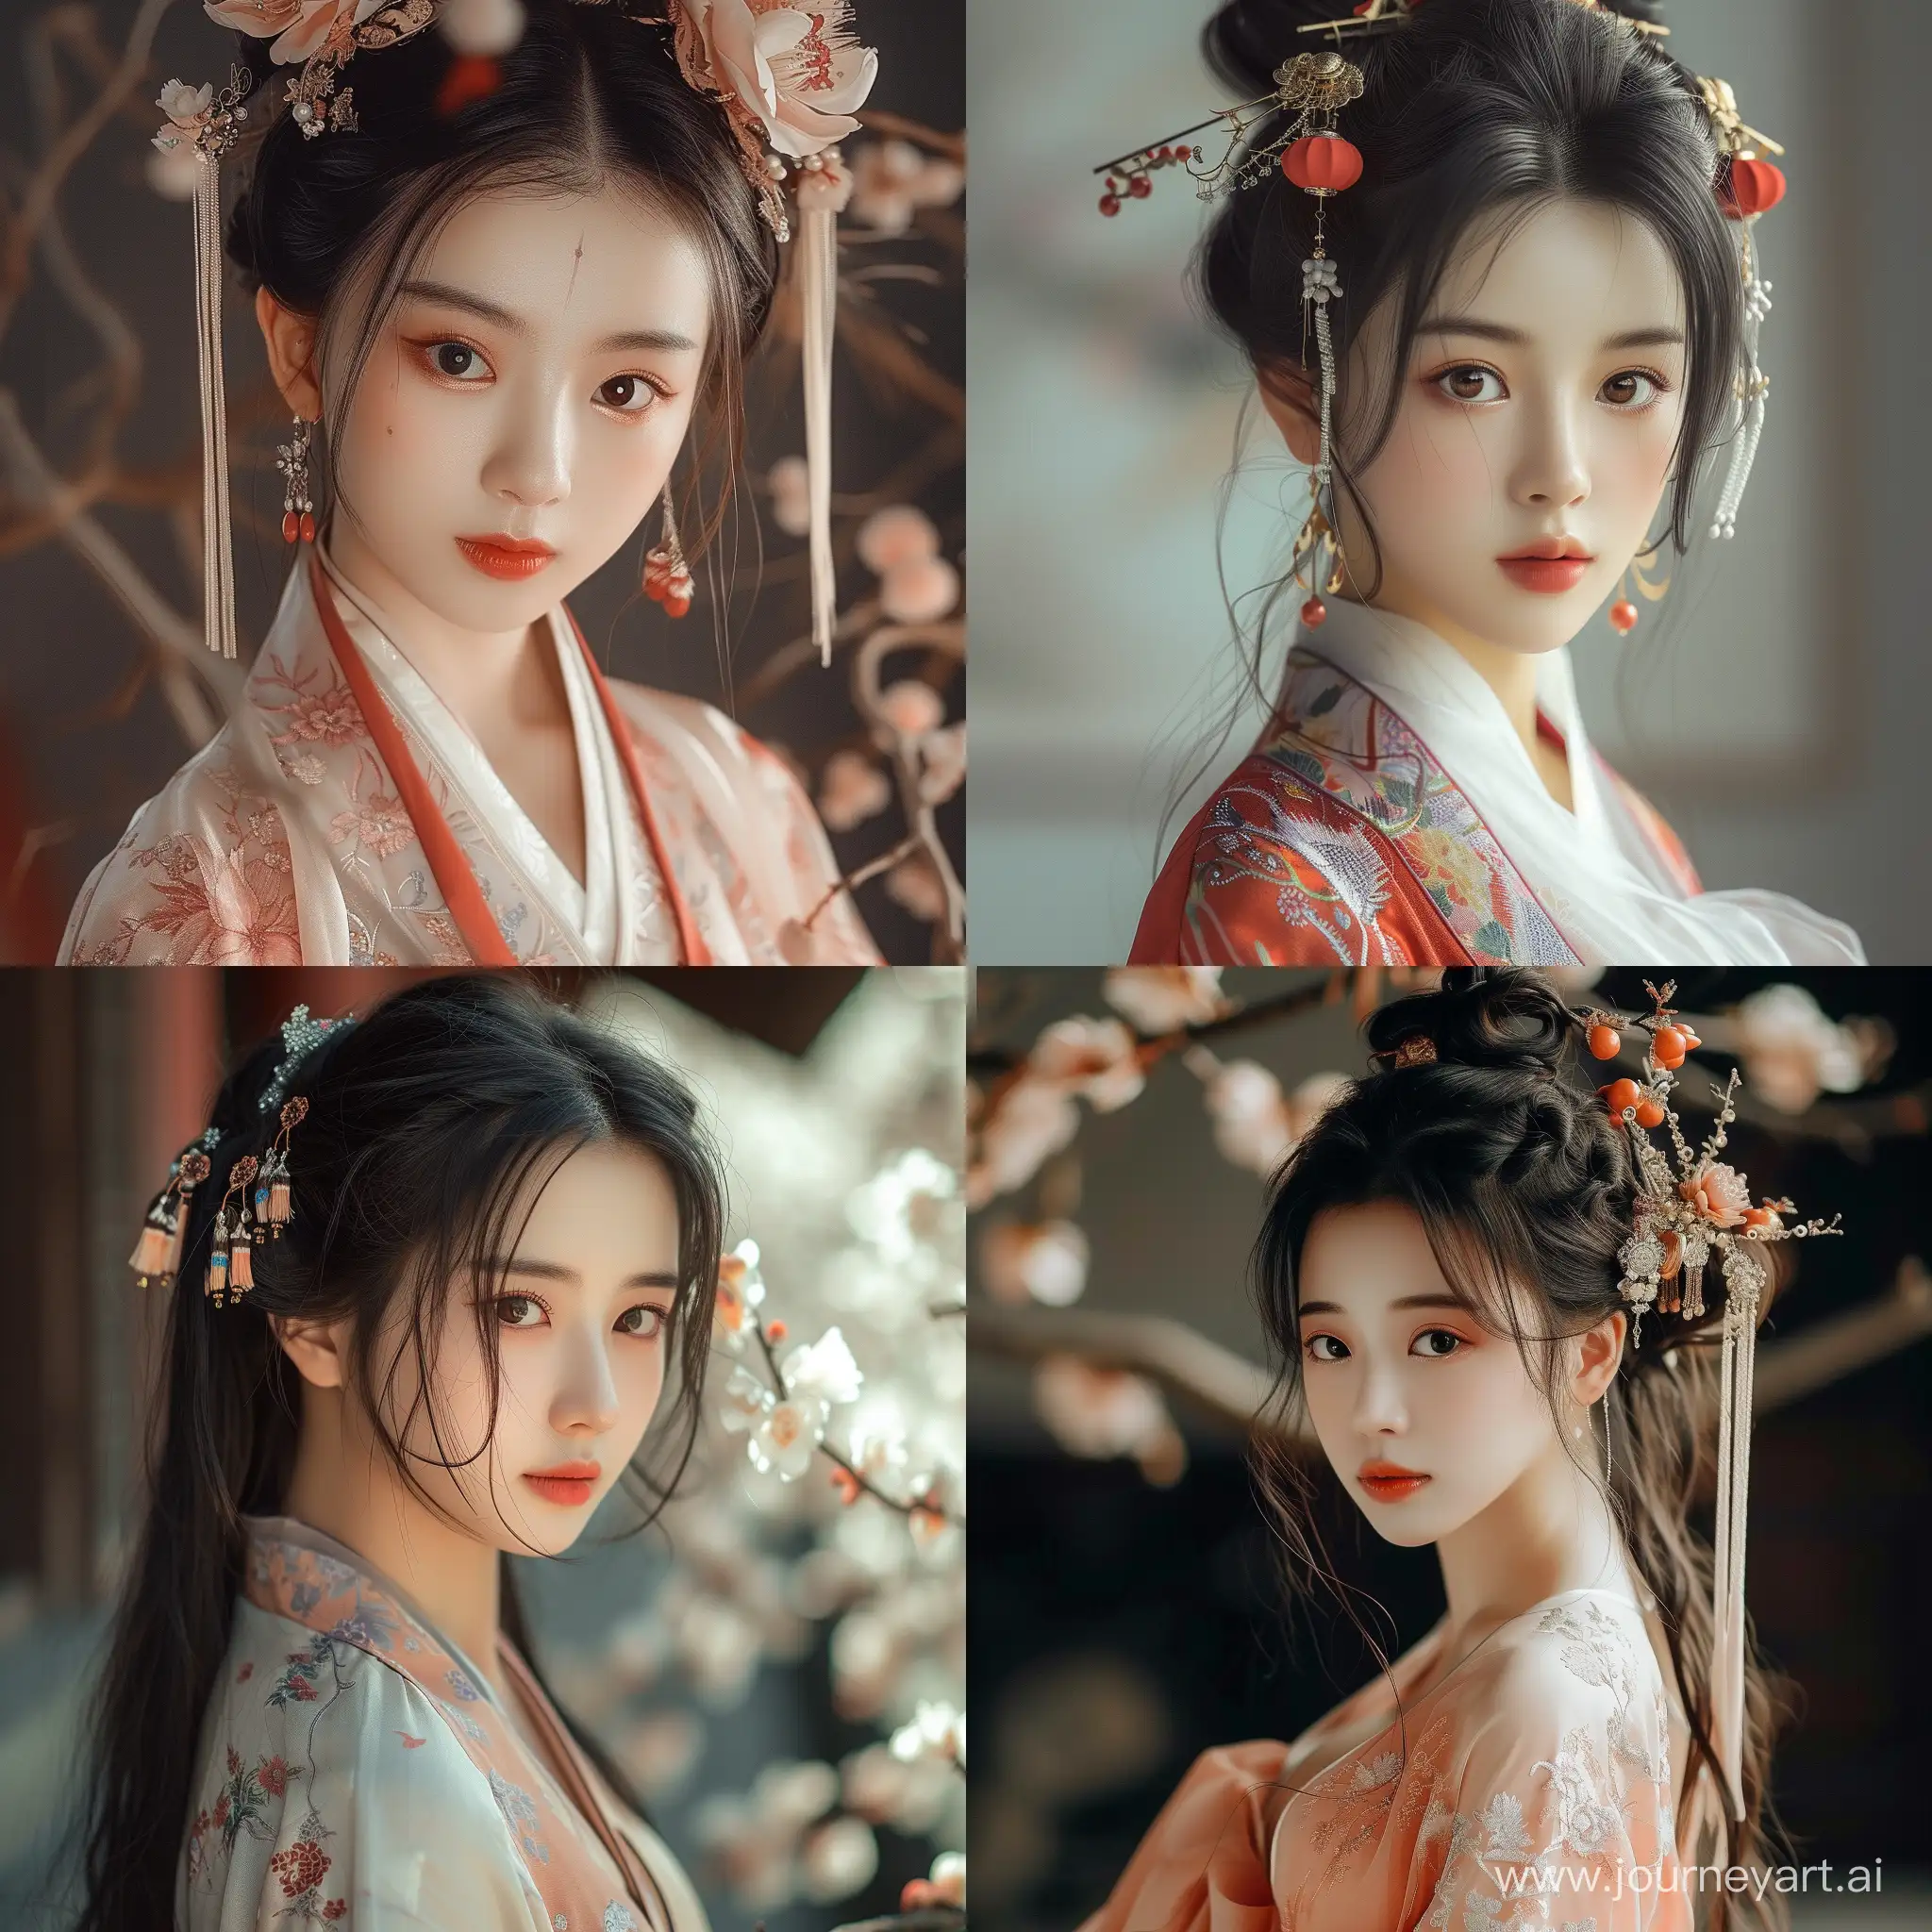 Elegant-Chinese-Beauty-in-Stunning-Portrait